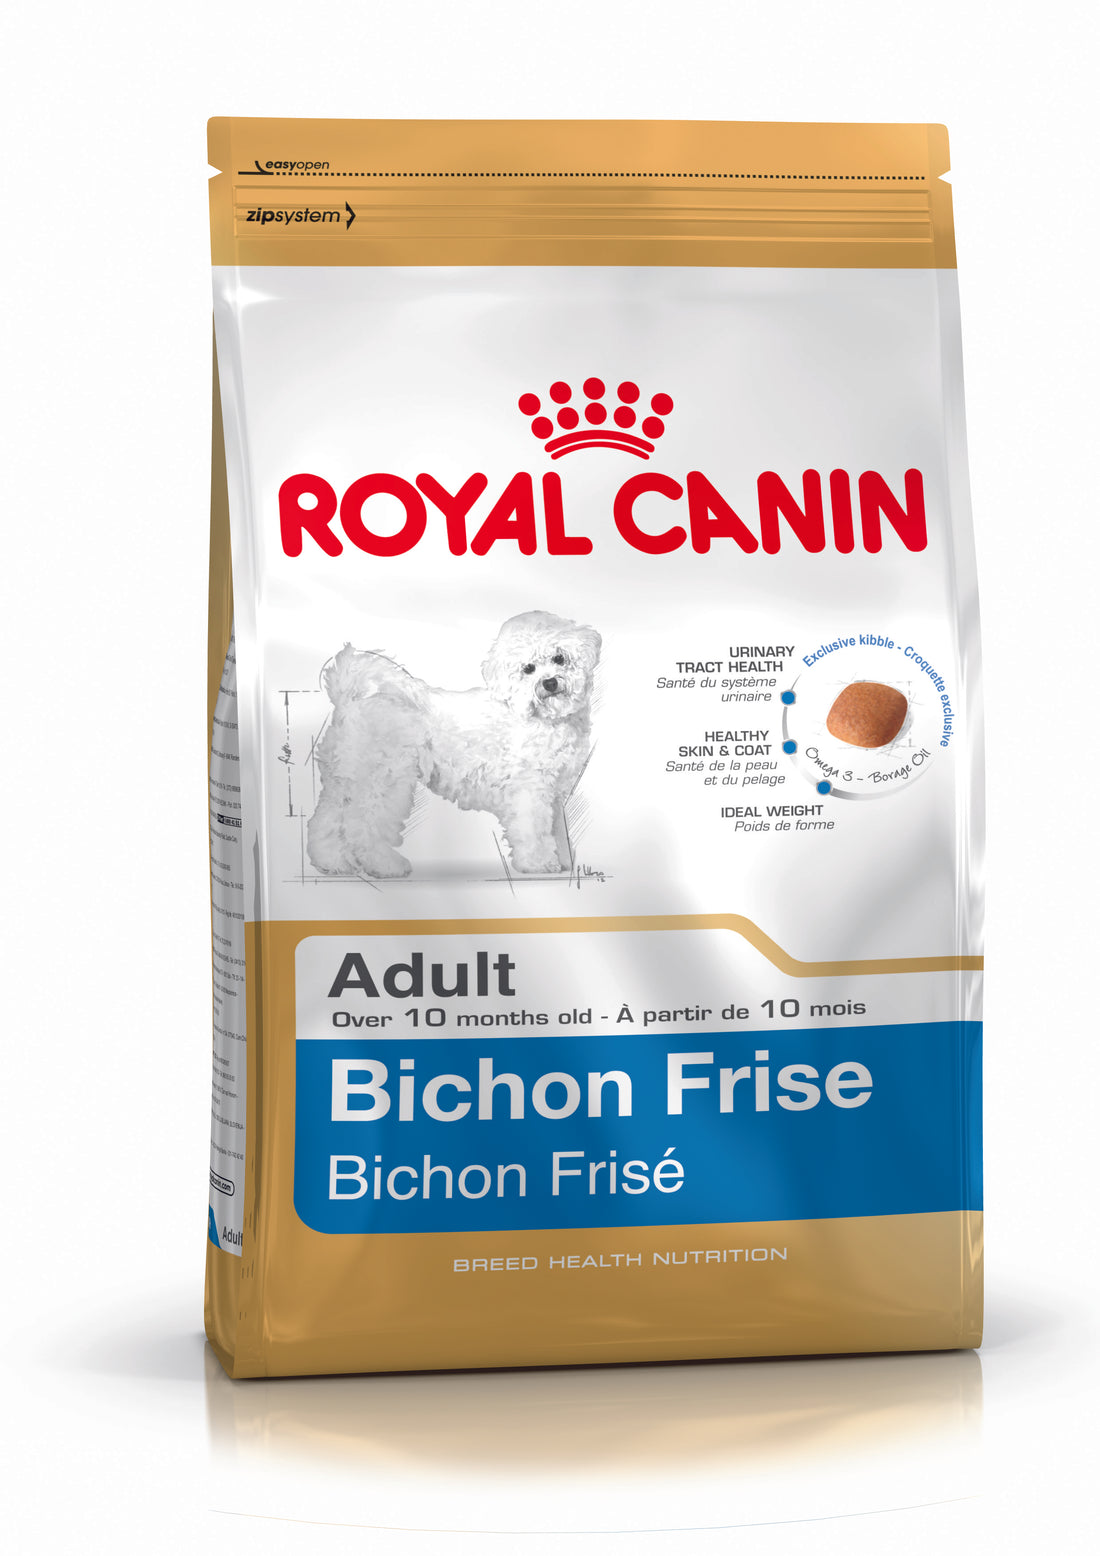 Royal Canin-Bichon Frise Dog Food 1.5Kg